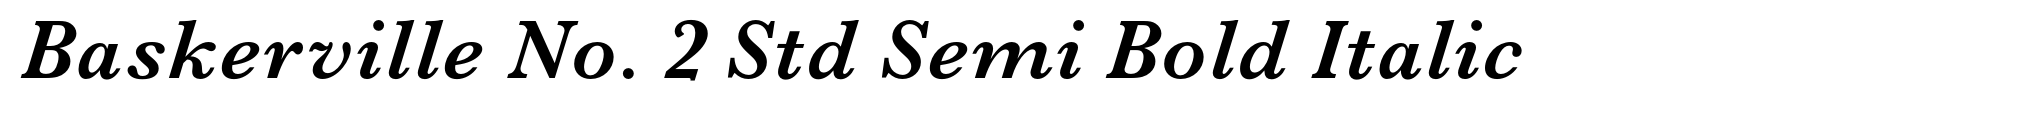 Baskerville No. 2 Std Semi Bold Italic image